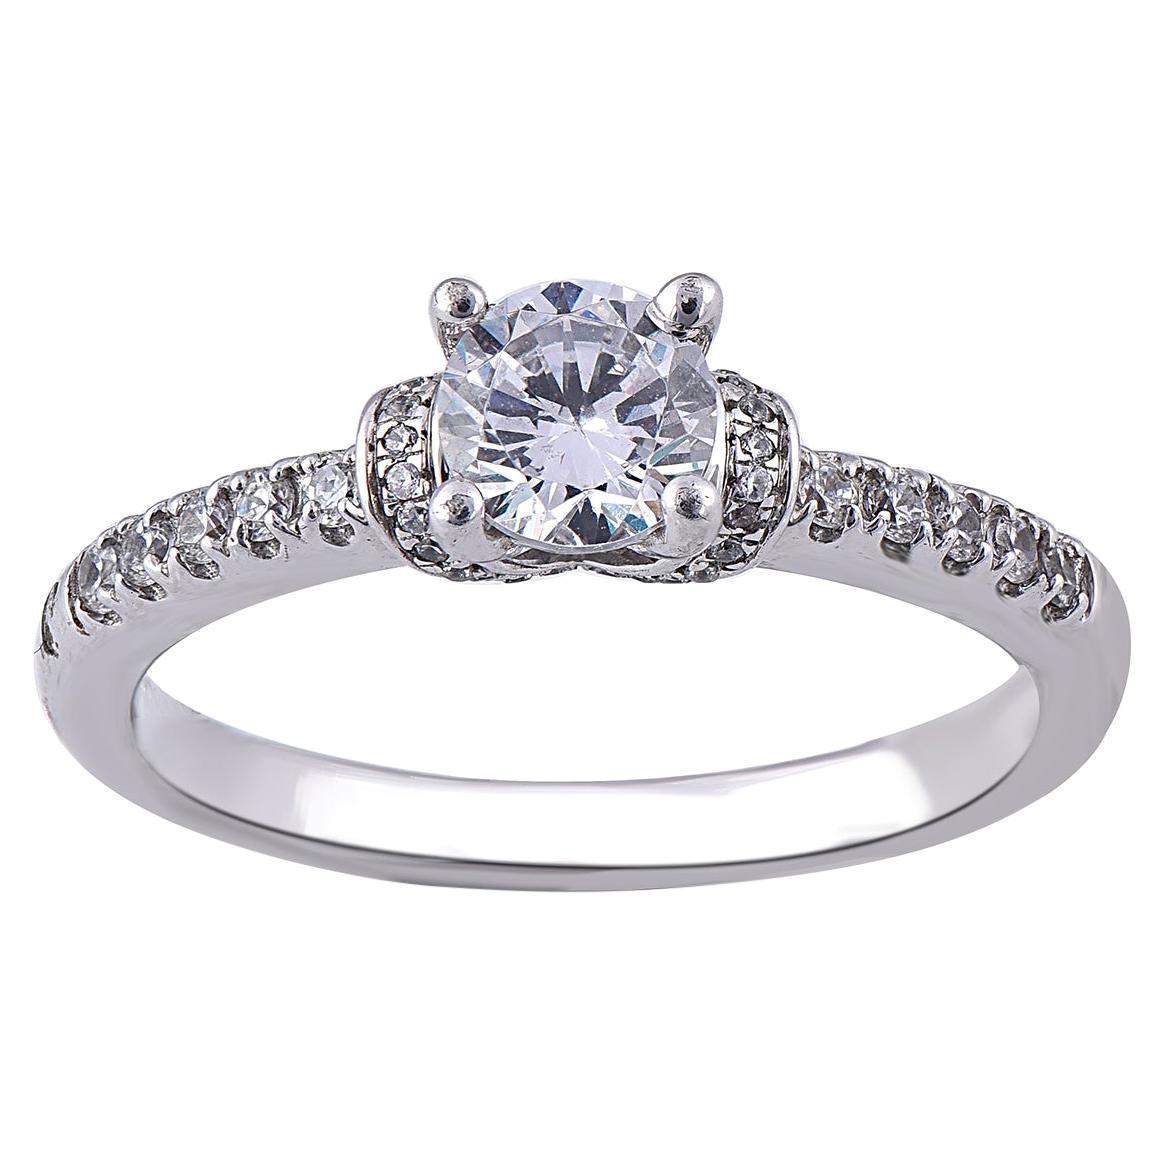 TJD 0.75 Carat Round Diamond 18 Karat White Gold Diamond Engagement Ring For Sale